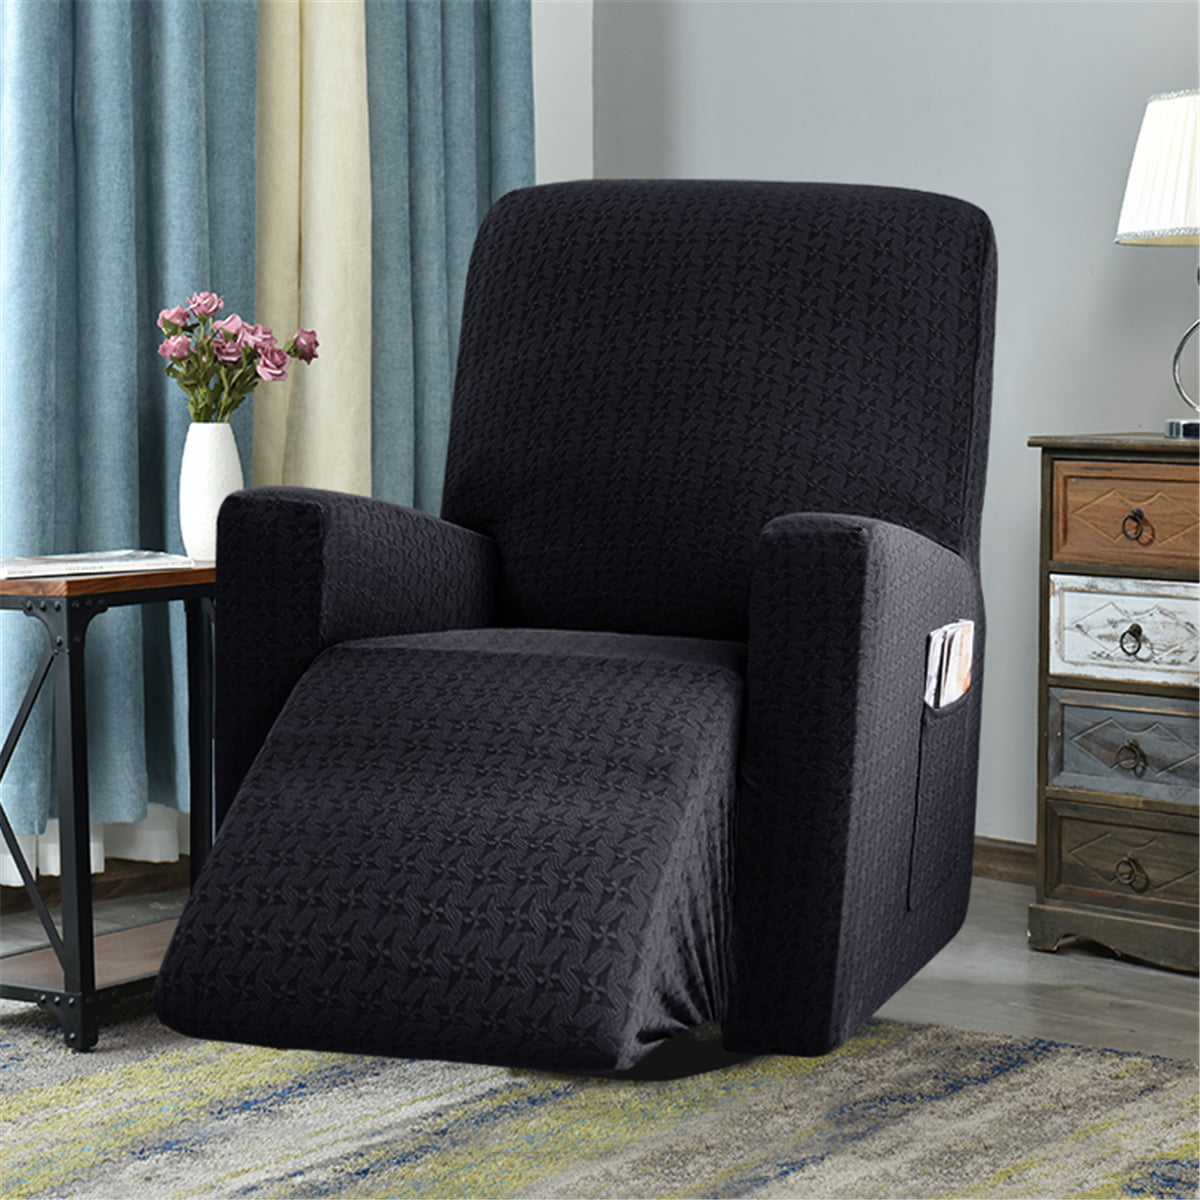 New Recliner Chair Slipcovers Walmart for Living room